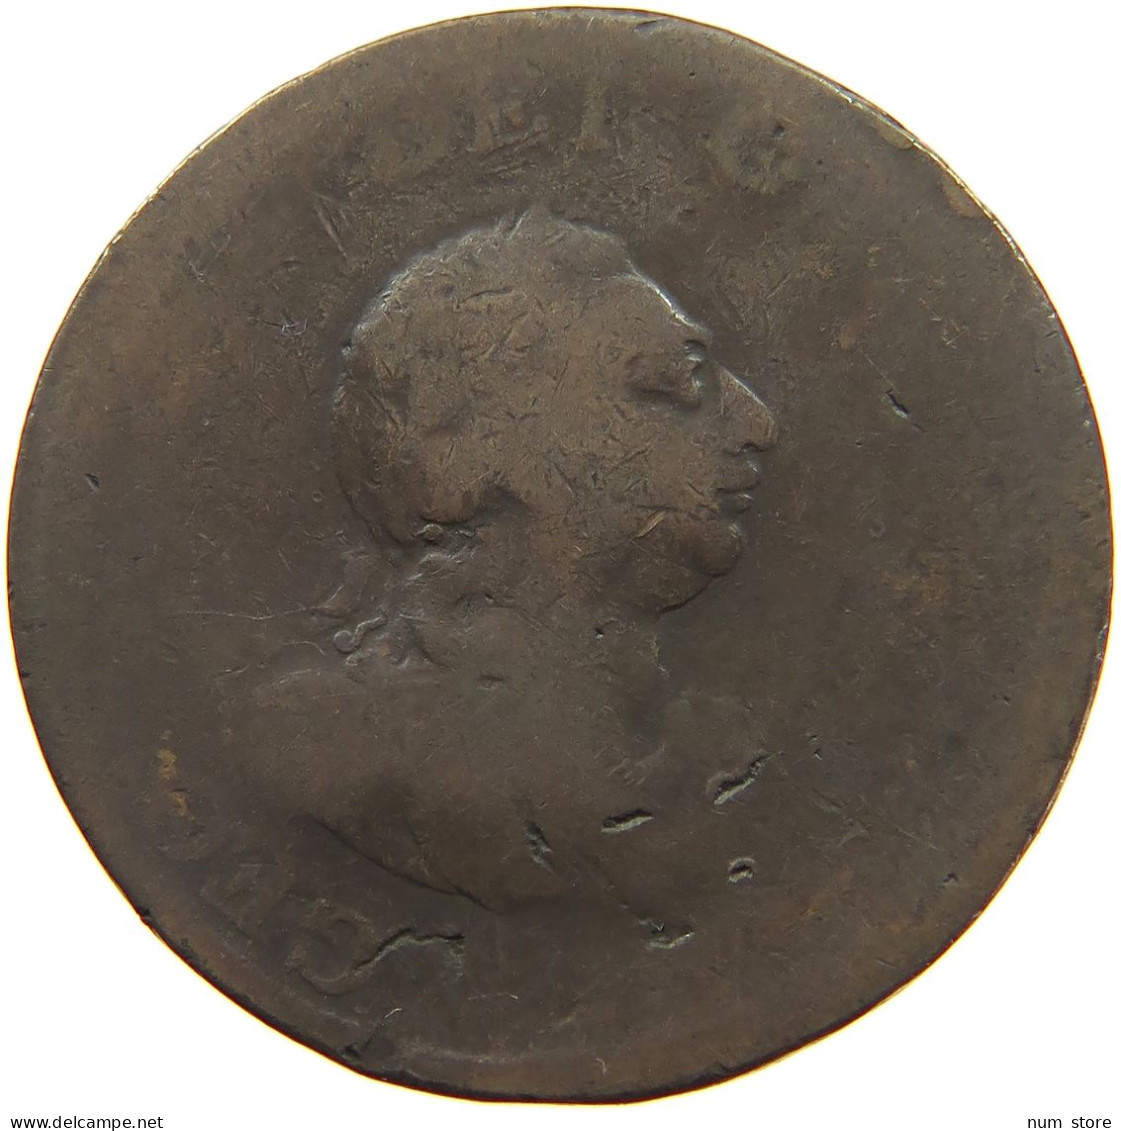 GREAT BRITAIN HALFPENNY 1799 GEORGE III. 1760-1820 COUNTERMARKED IBLU #a075 0055 - B. 1/2 Penny